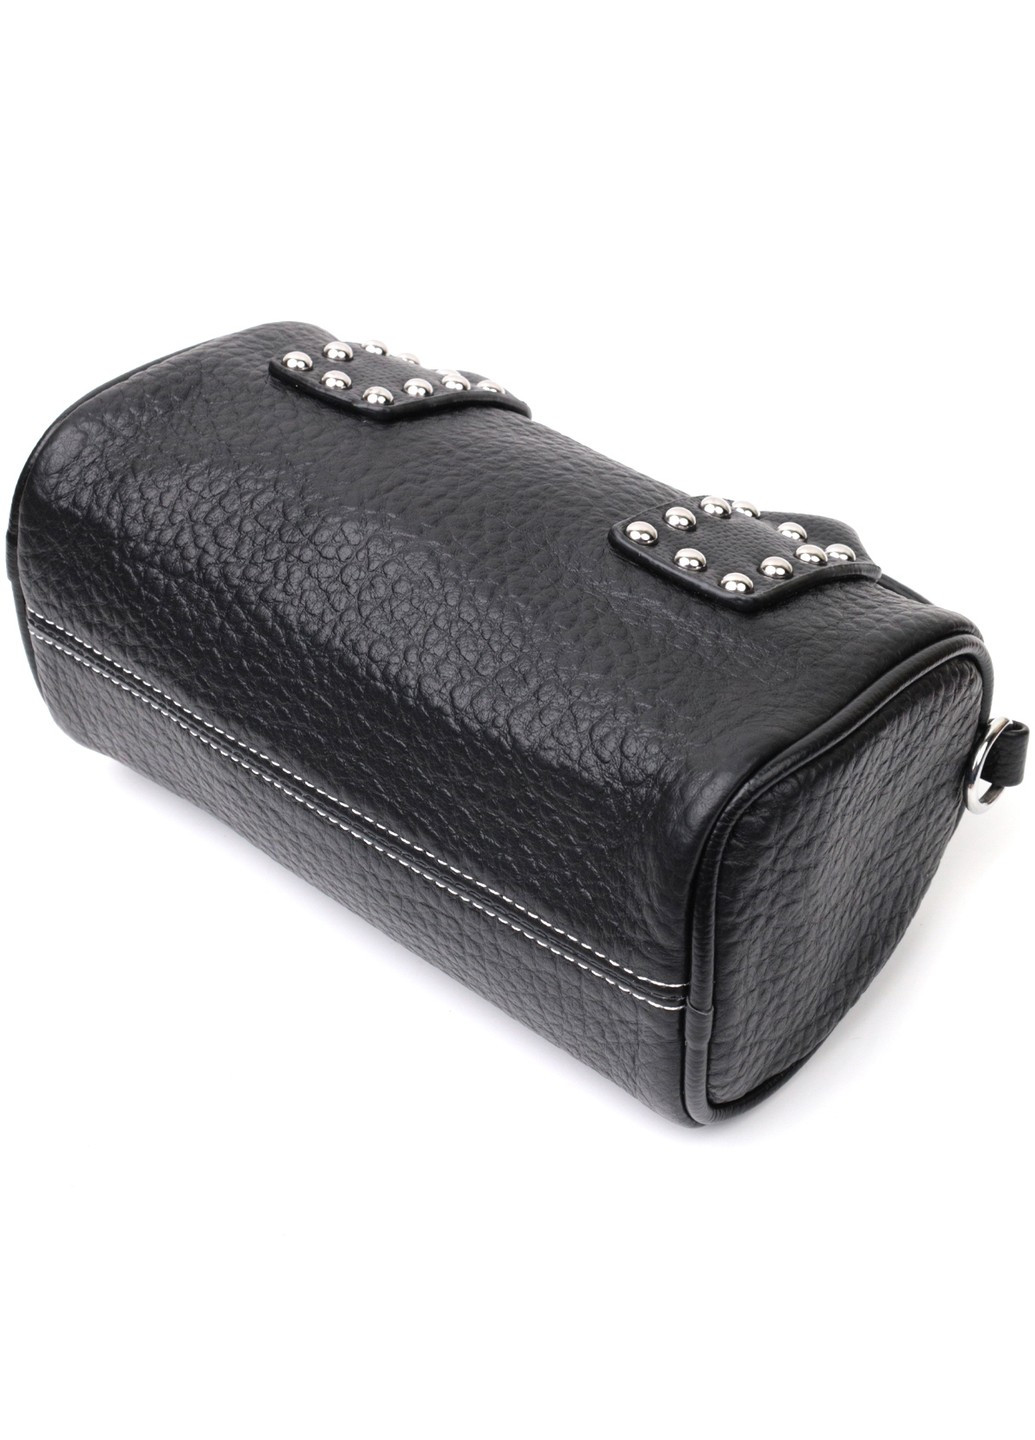 Шкіряна жіноча сумка з металевими акцентами на ручках 22369 Чорна Vintage (276457551)